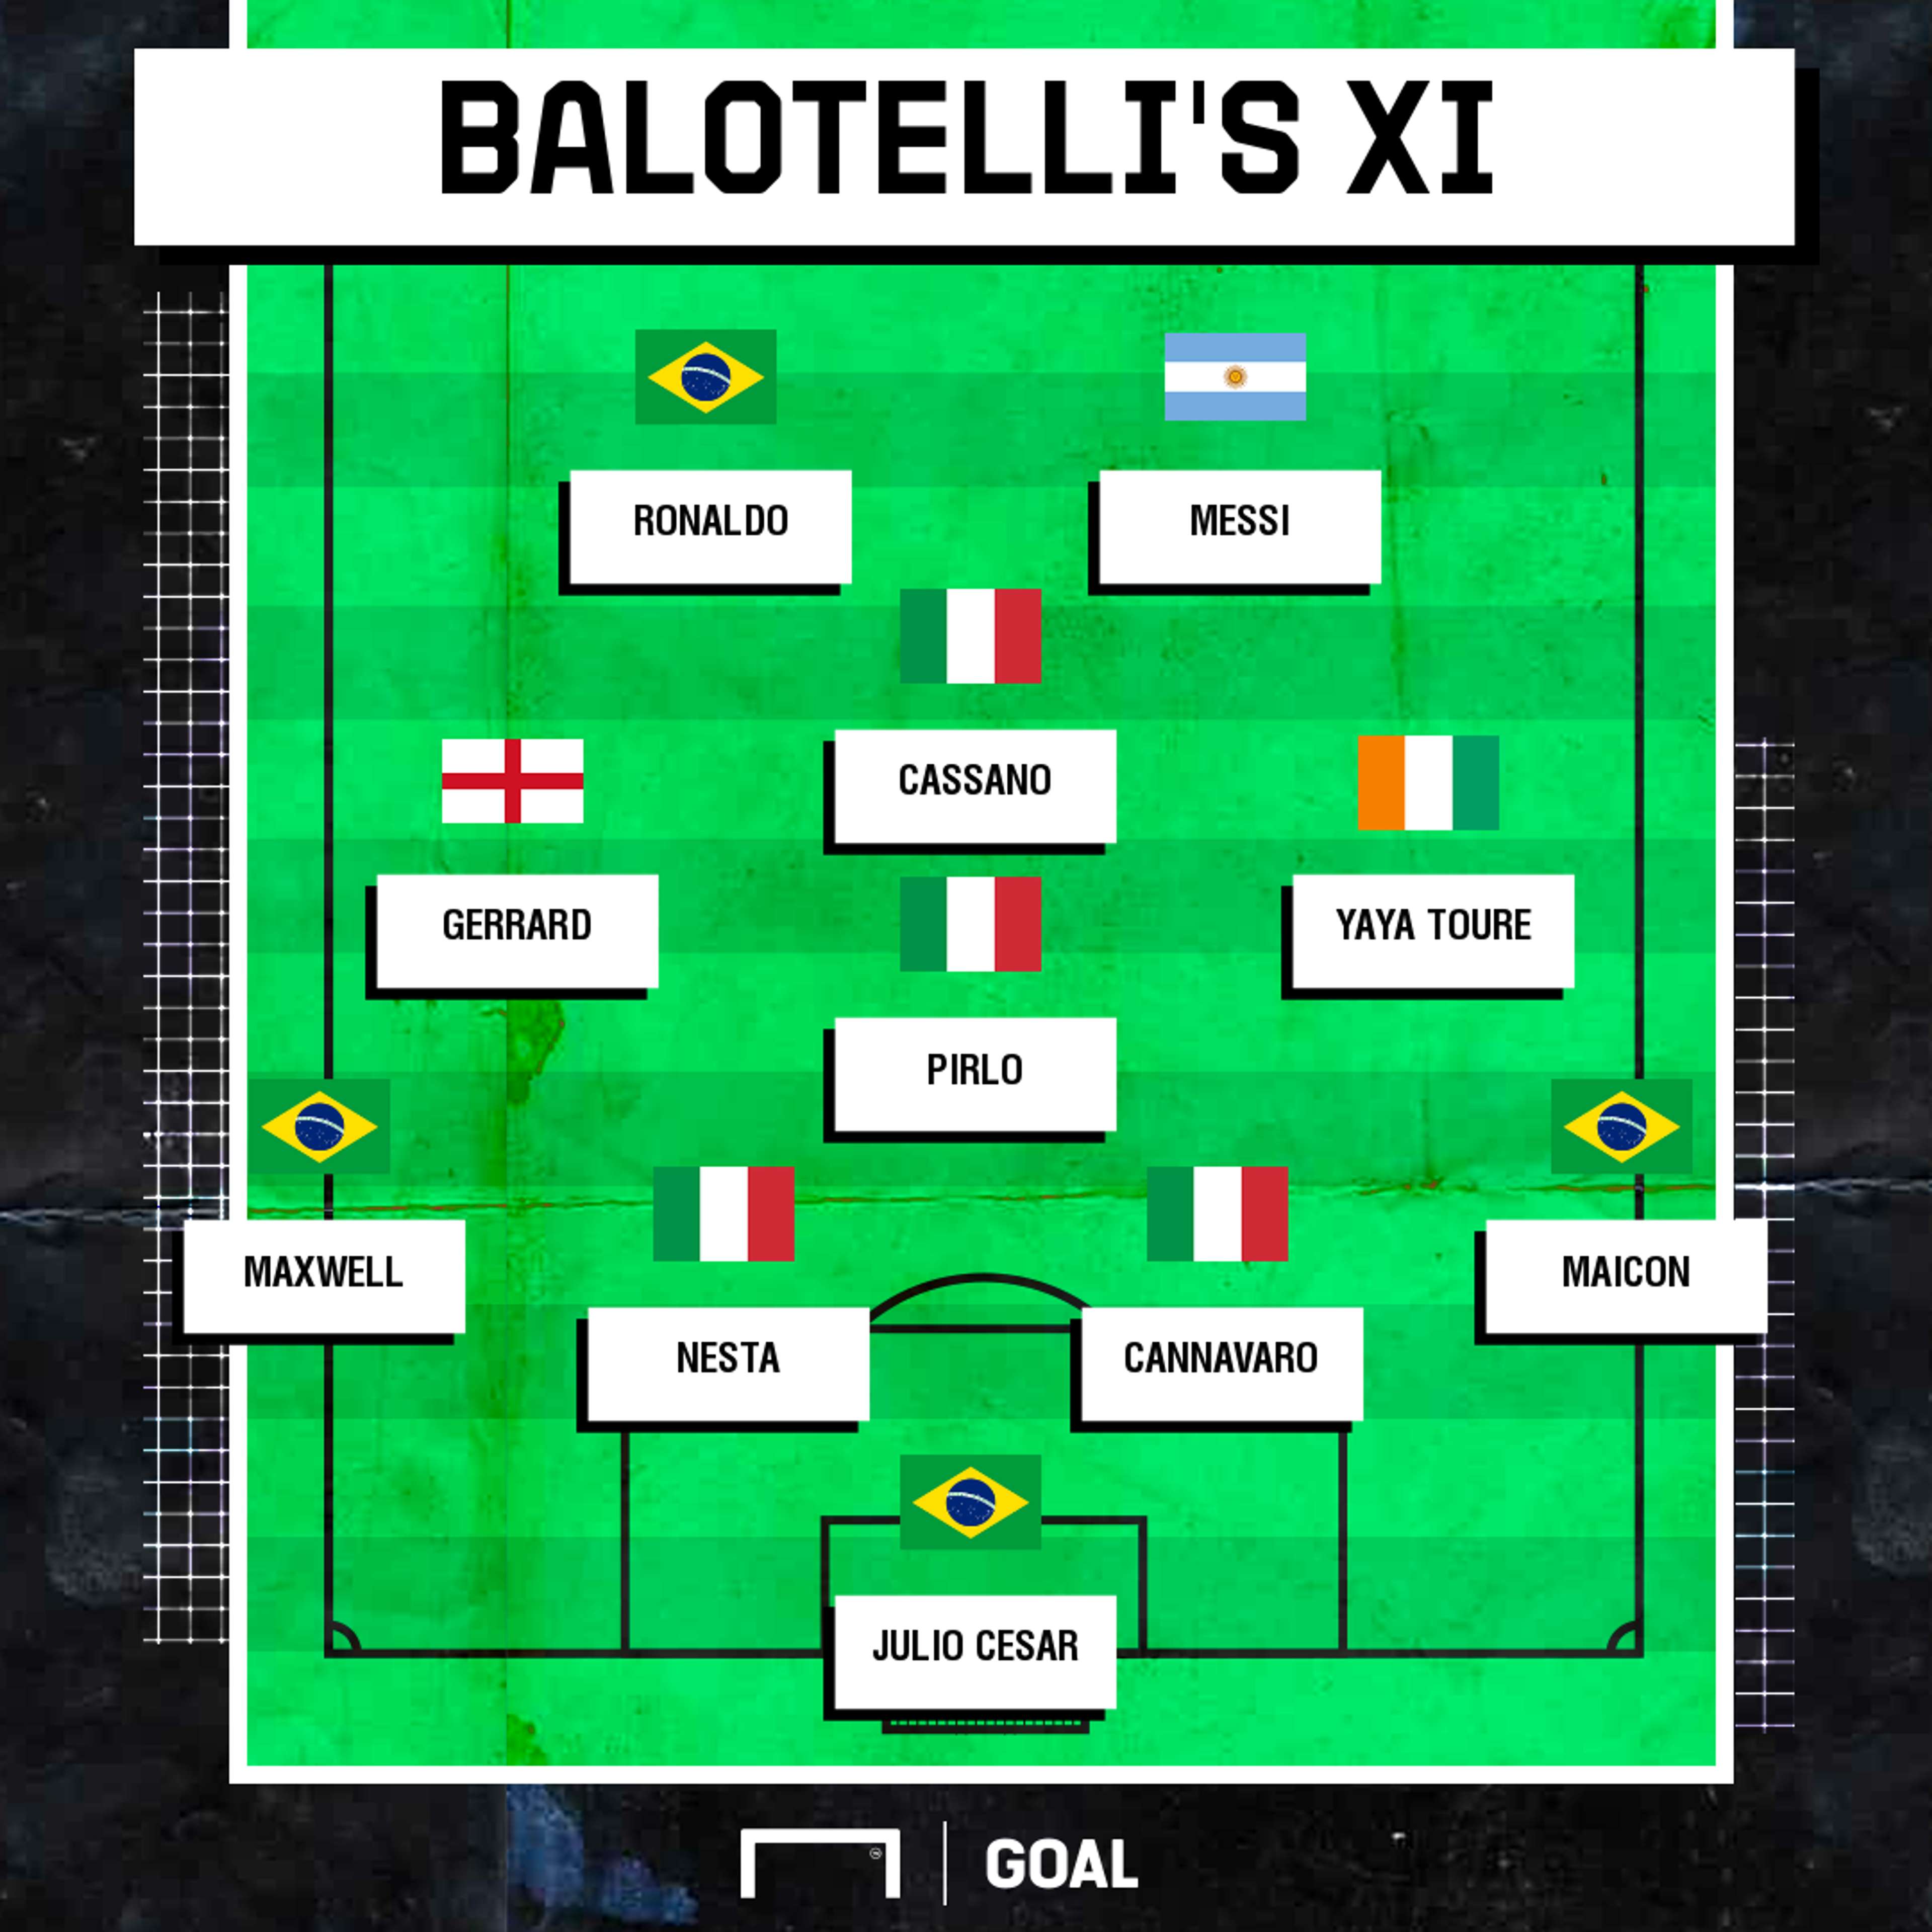 Balotelli's XI